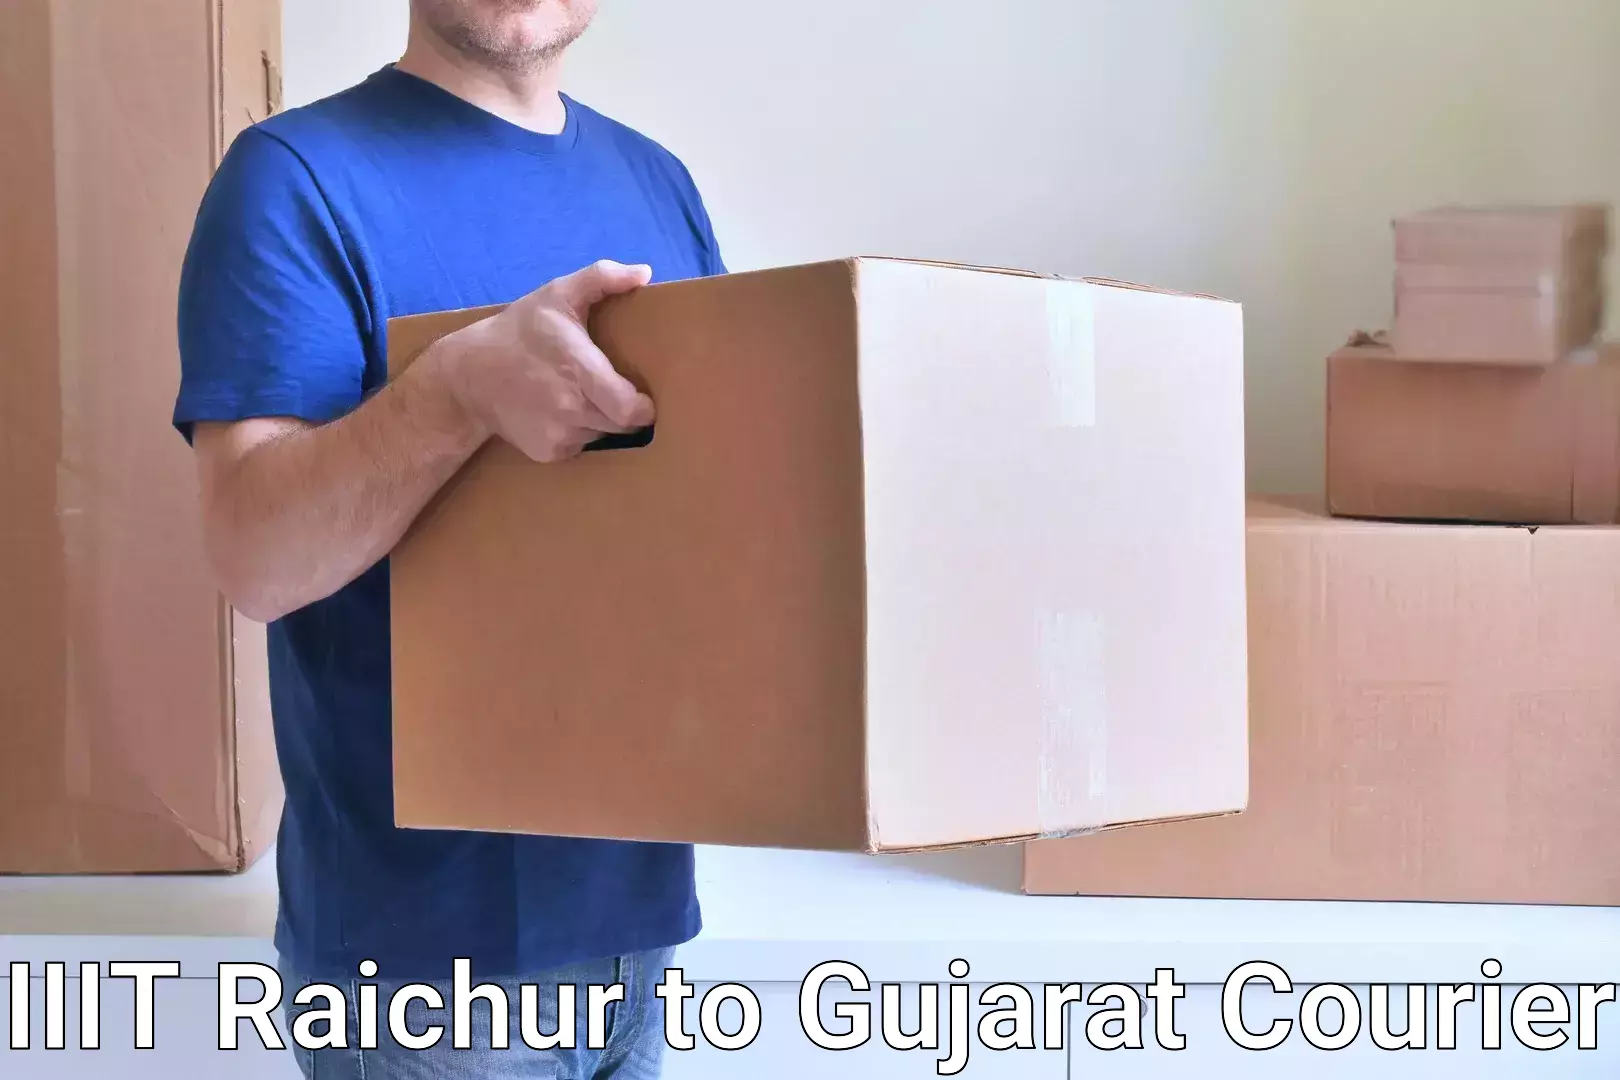 User-friendly courier app IIIT Raichur to Vijapur